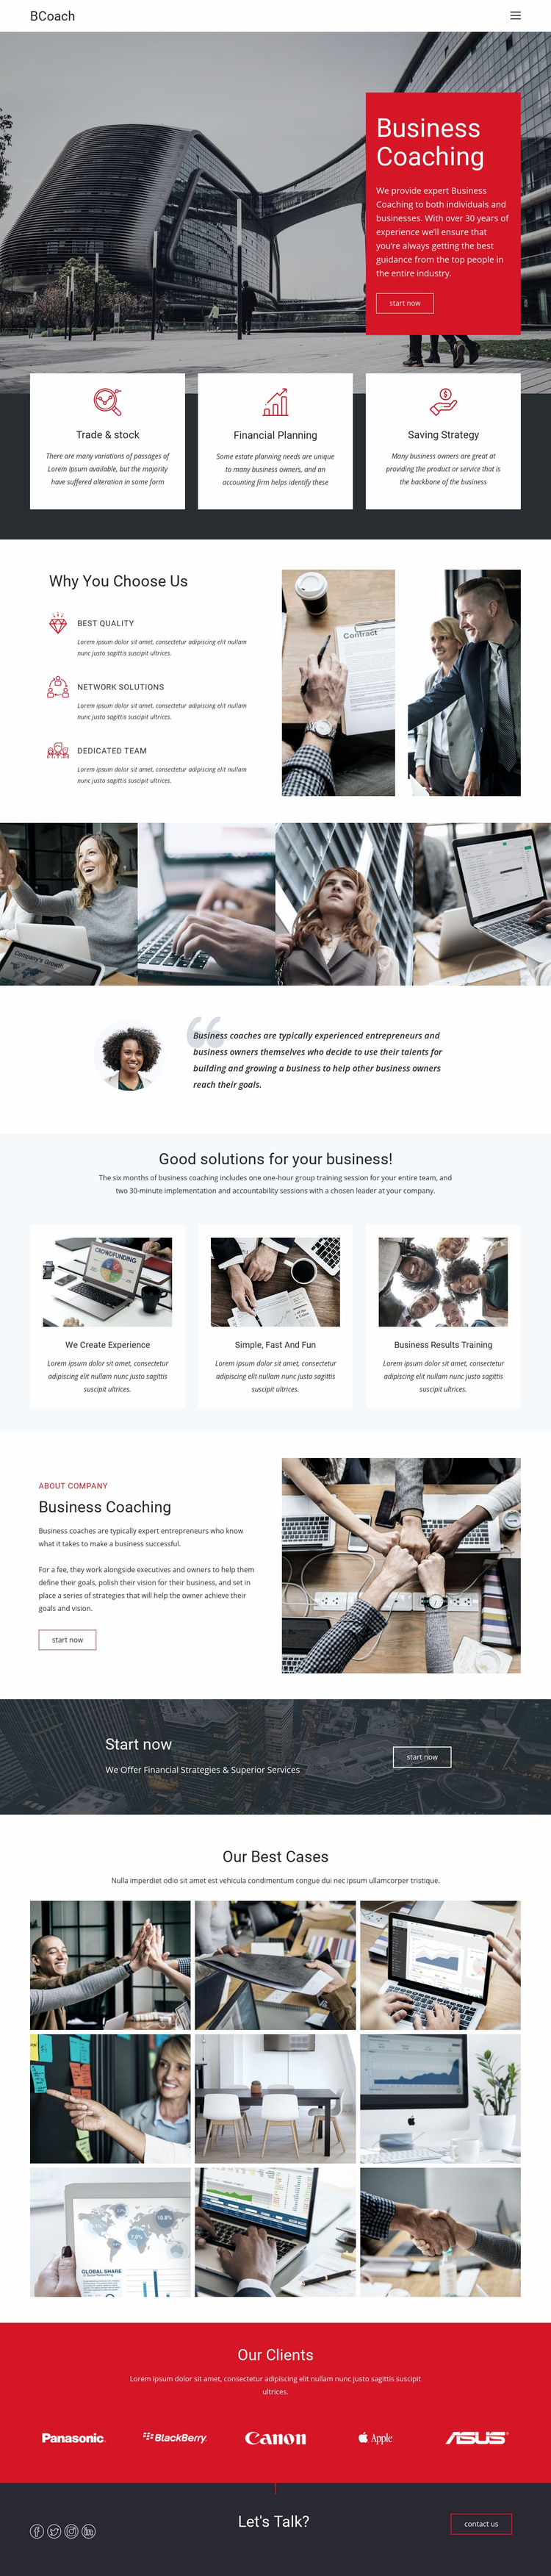 Executive coaching Web Page Design